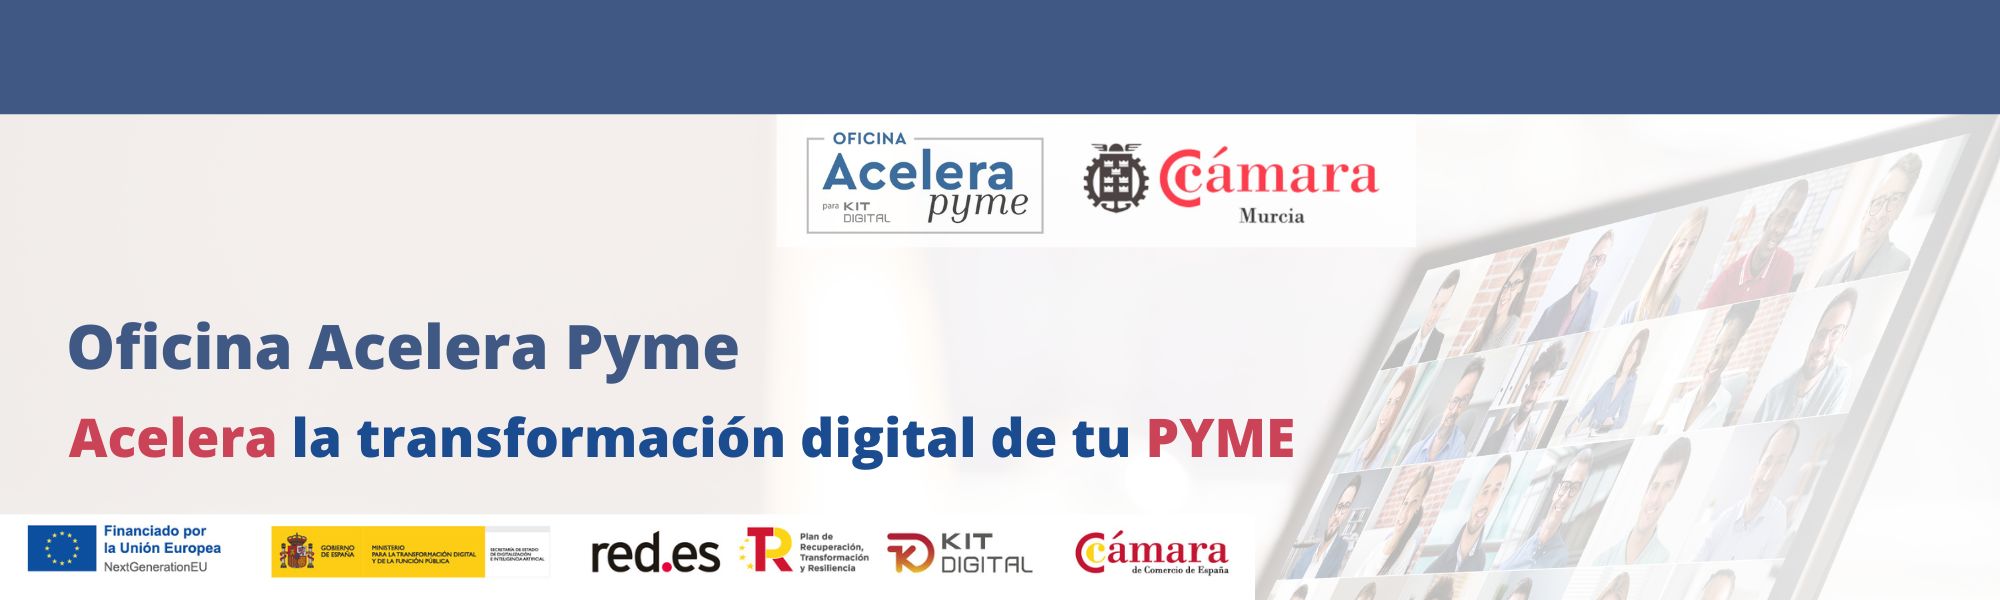 Oficina Acelera Pyme | Cámara de Comercio de Murcia | Transformación Digital | Ayudas